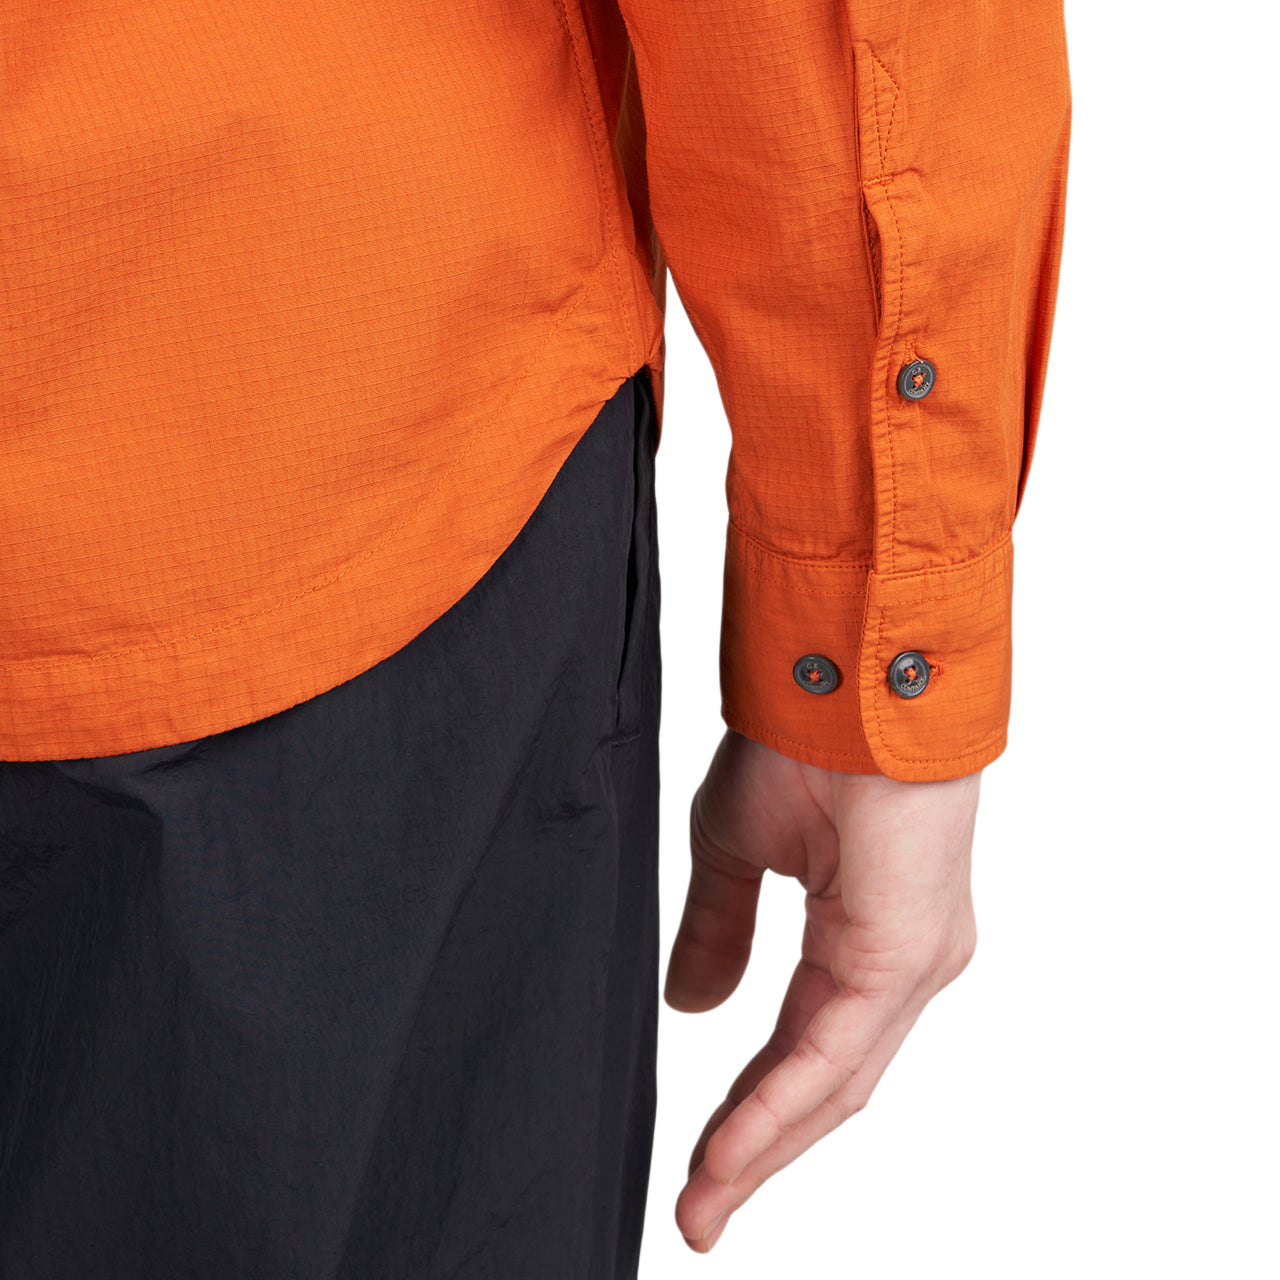 C.P. Company Rip Stop Pocket Shirt (Orange)  - Allike Store